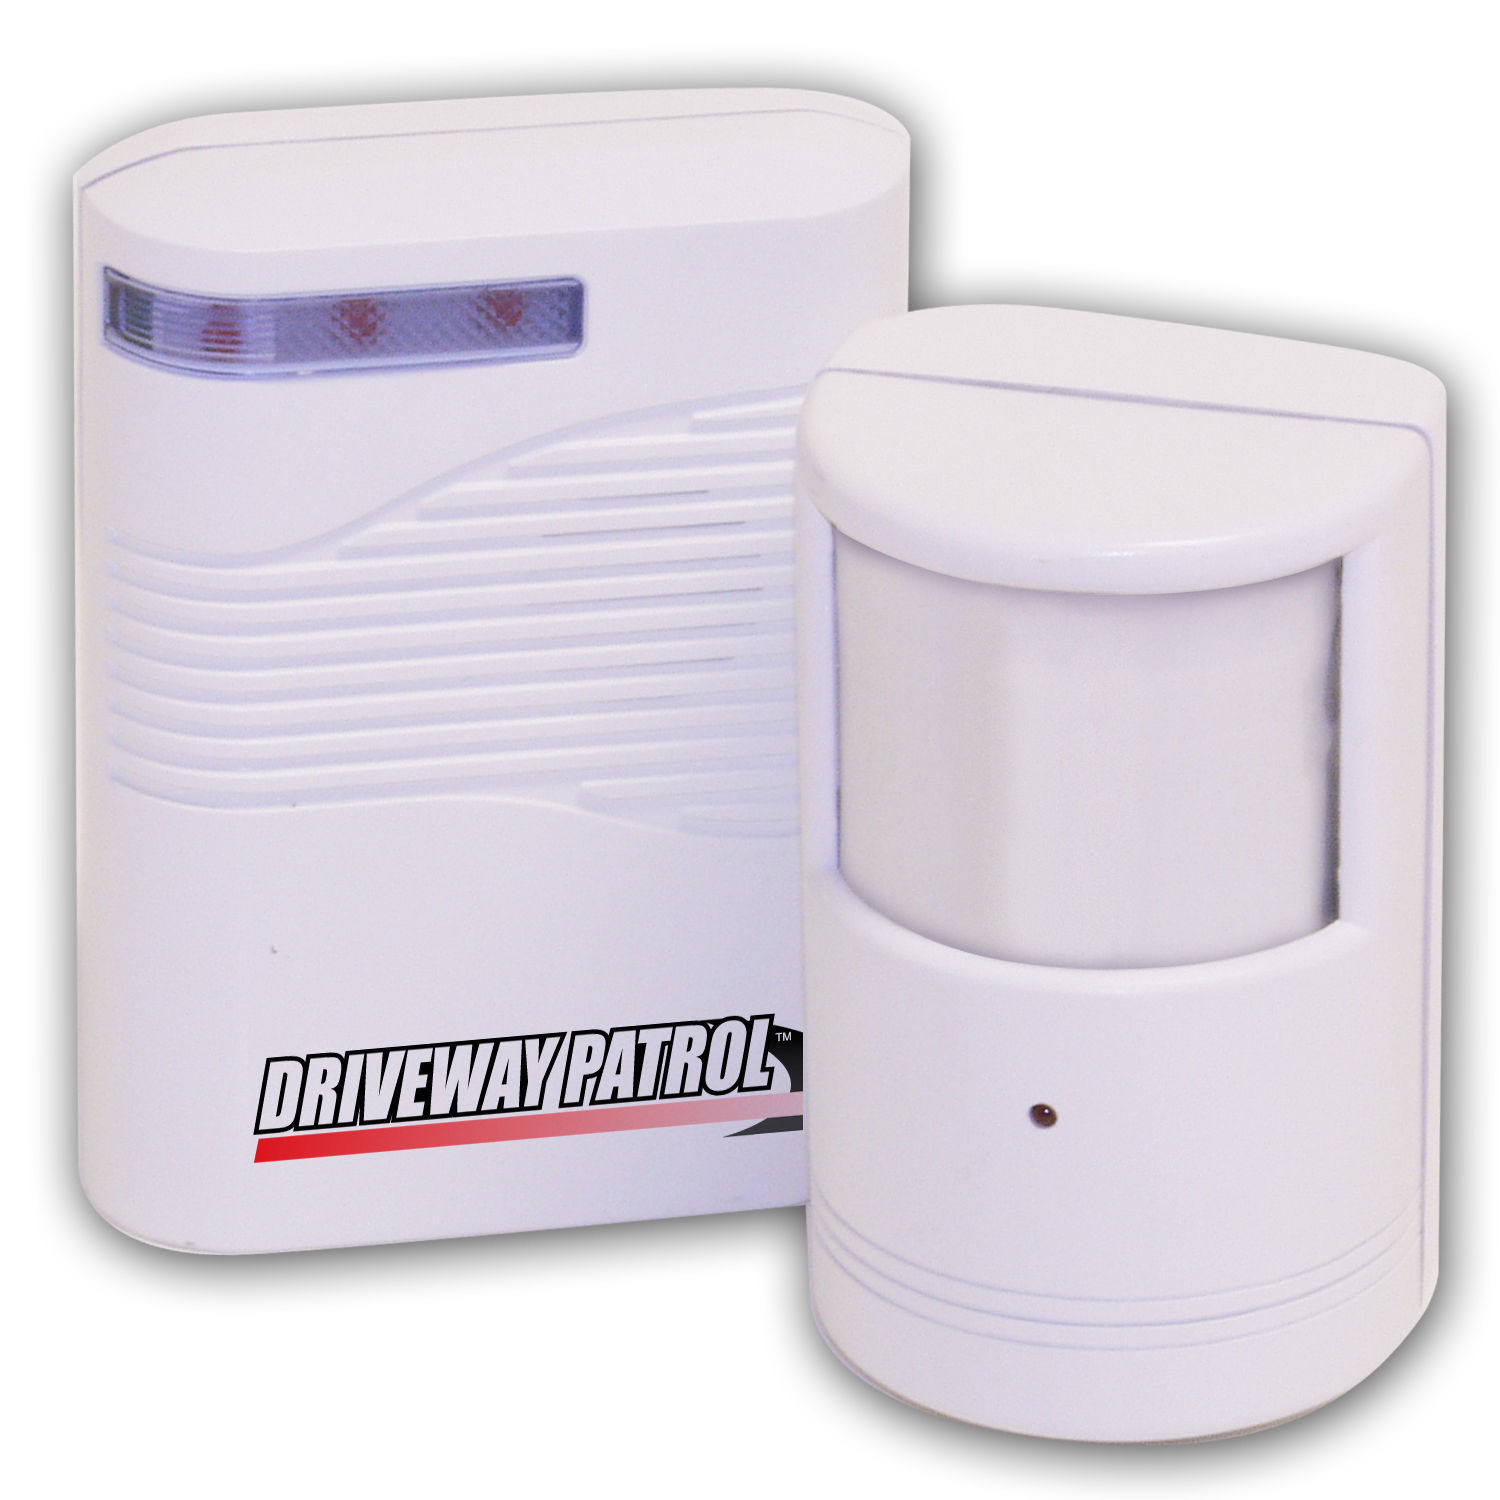 Driveway Patrol Garage Motion Sensor Security System | eBay